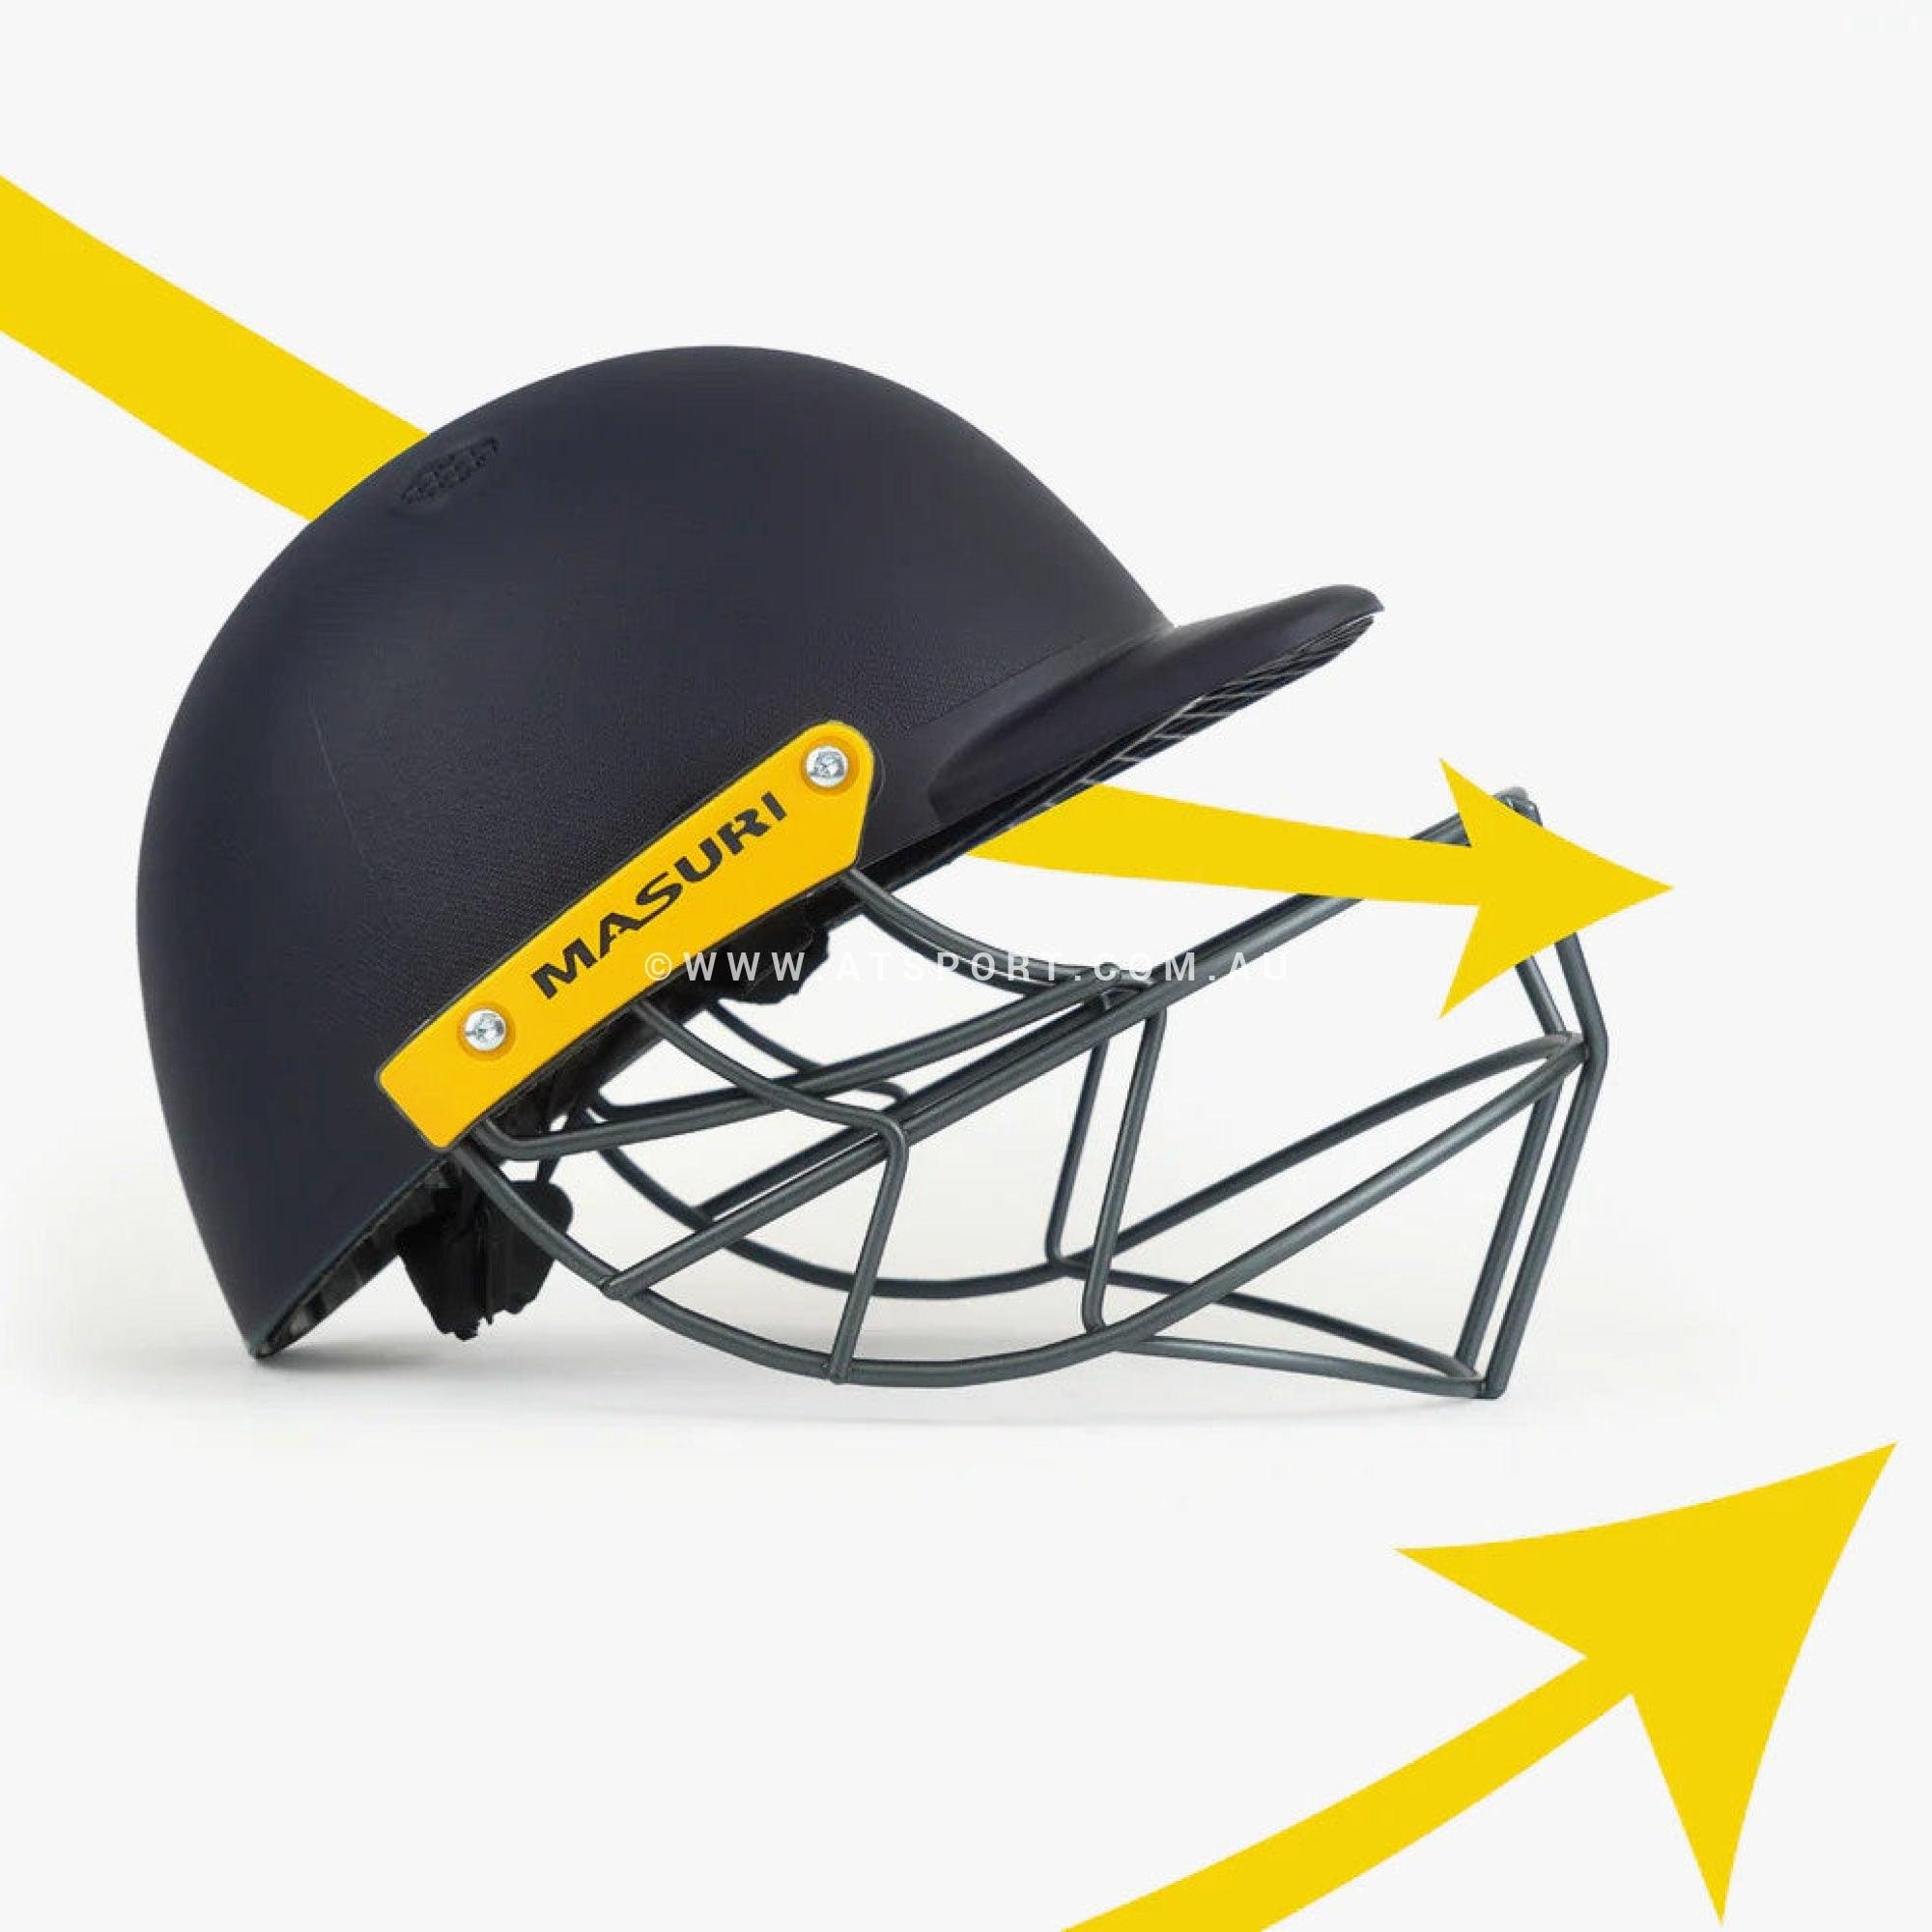 Masuri C LINE STEEL Grille Cricket Helmet - JUNIOR - AT Sports